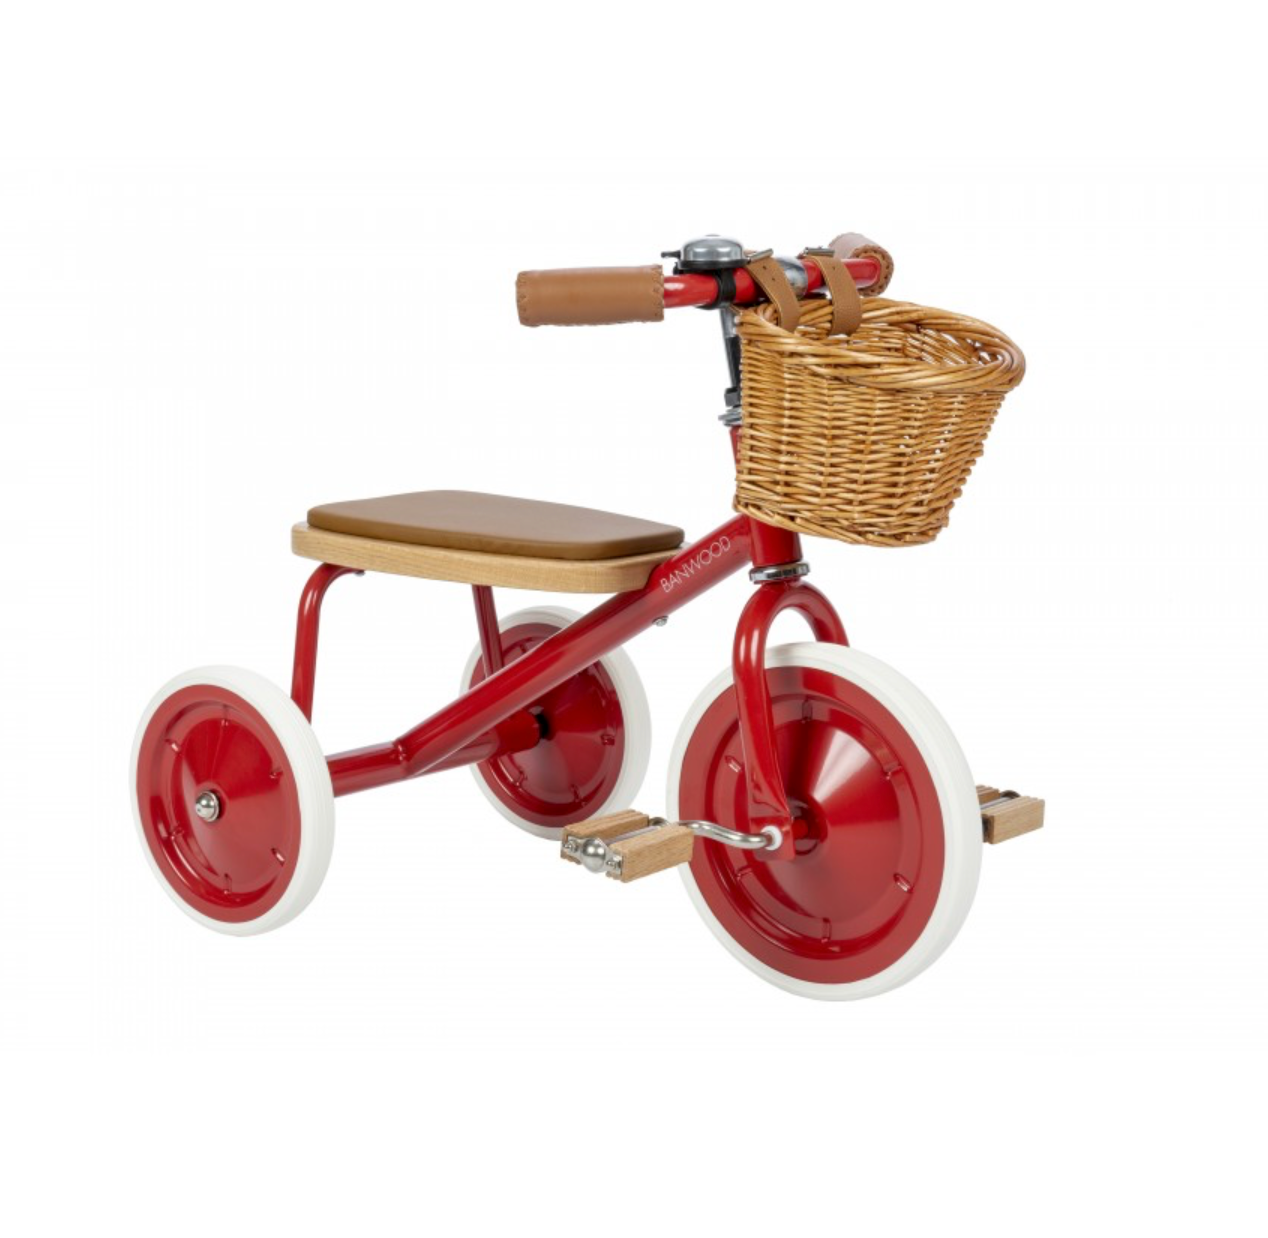 Banwood tricycle red - little birdies